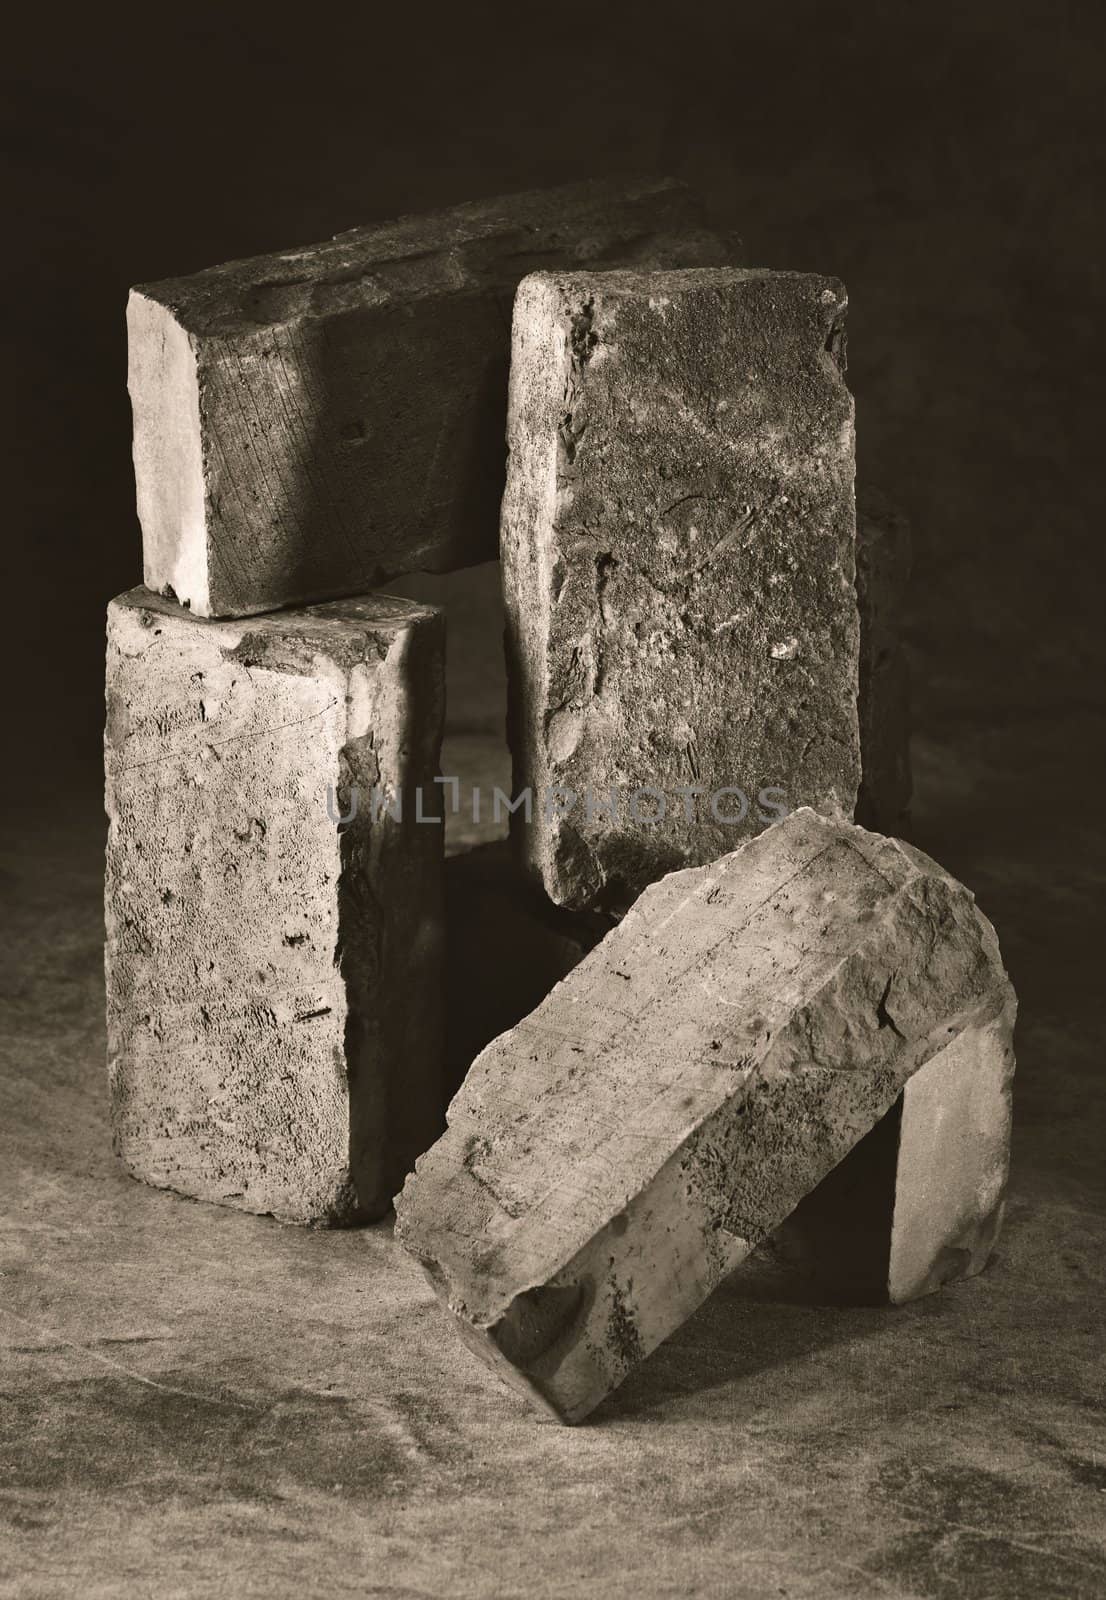 Monochrome sepia image of old bricks still life.